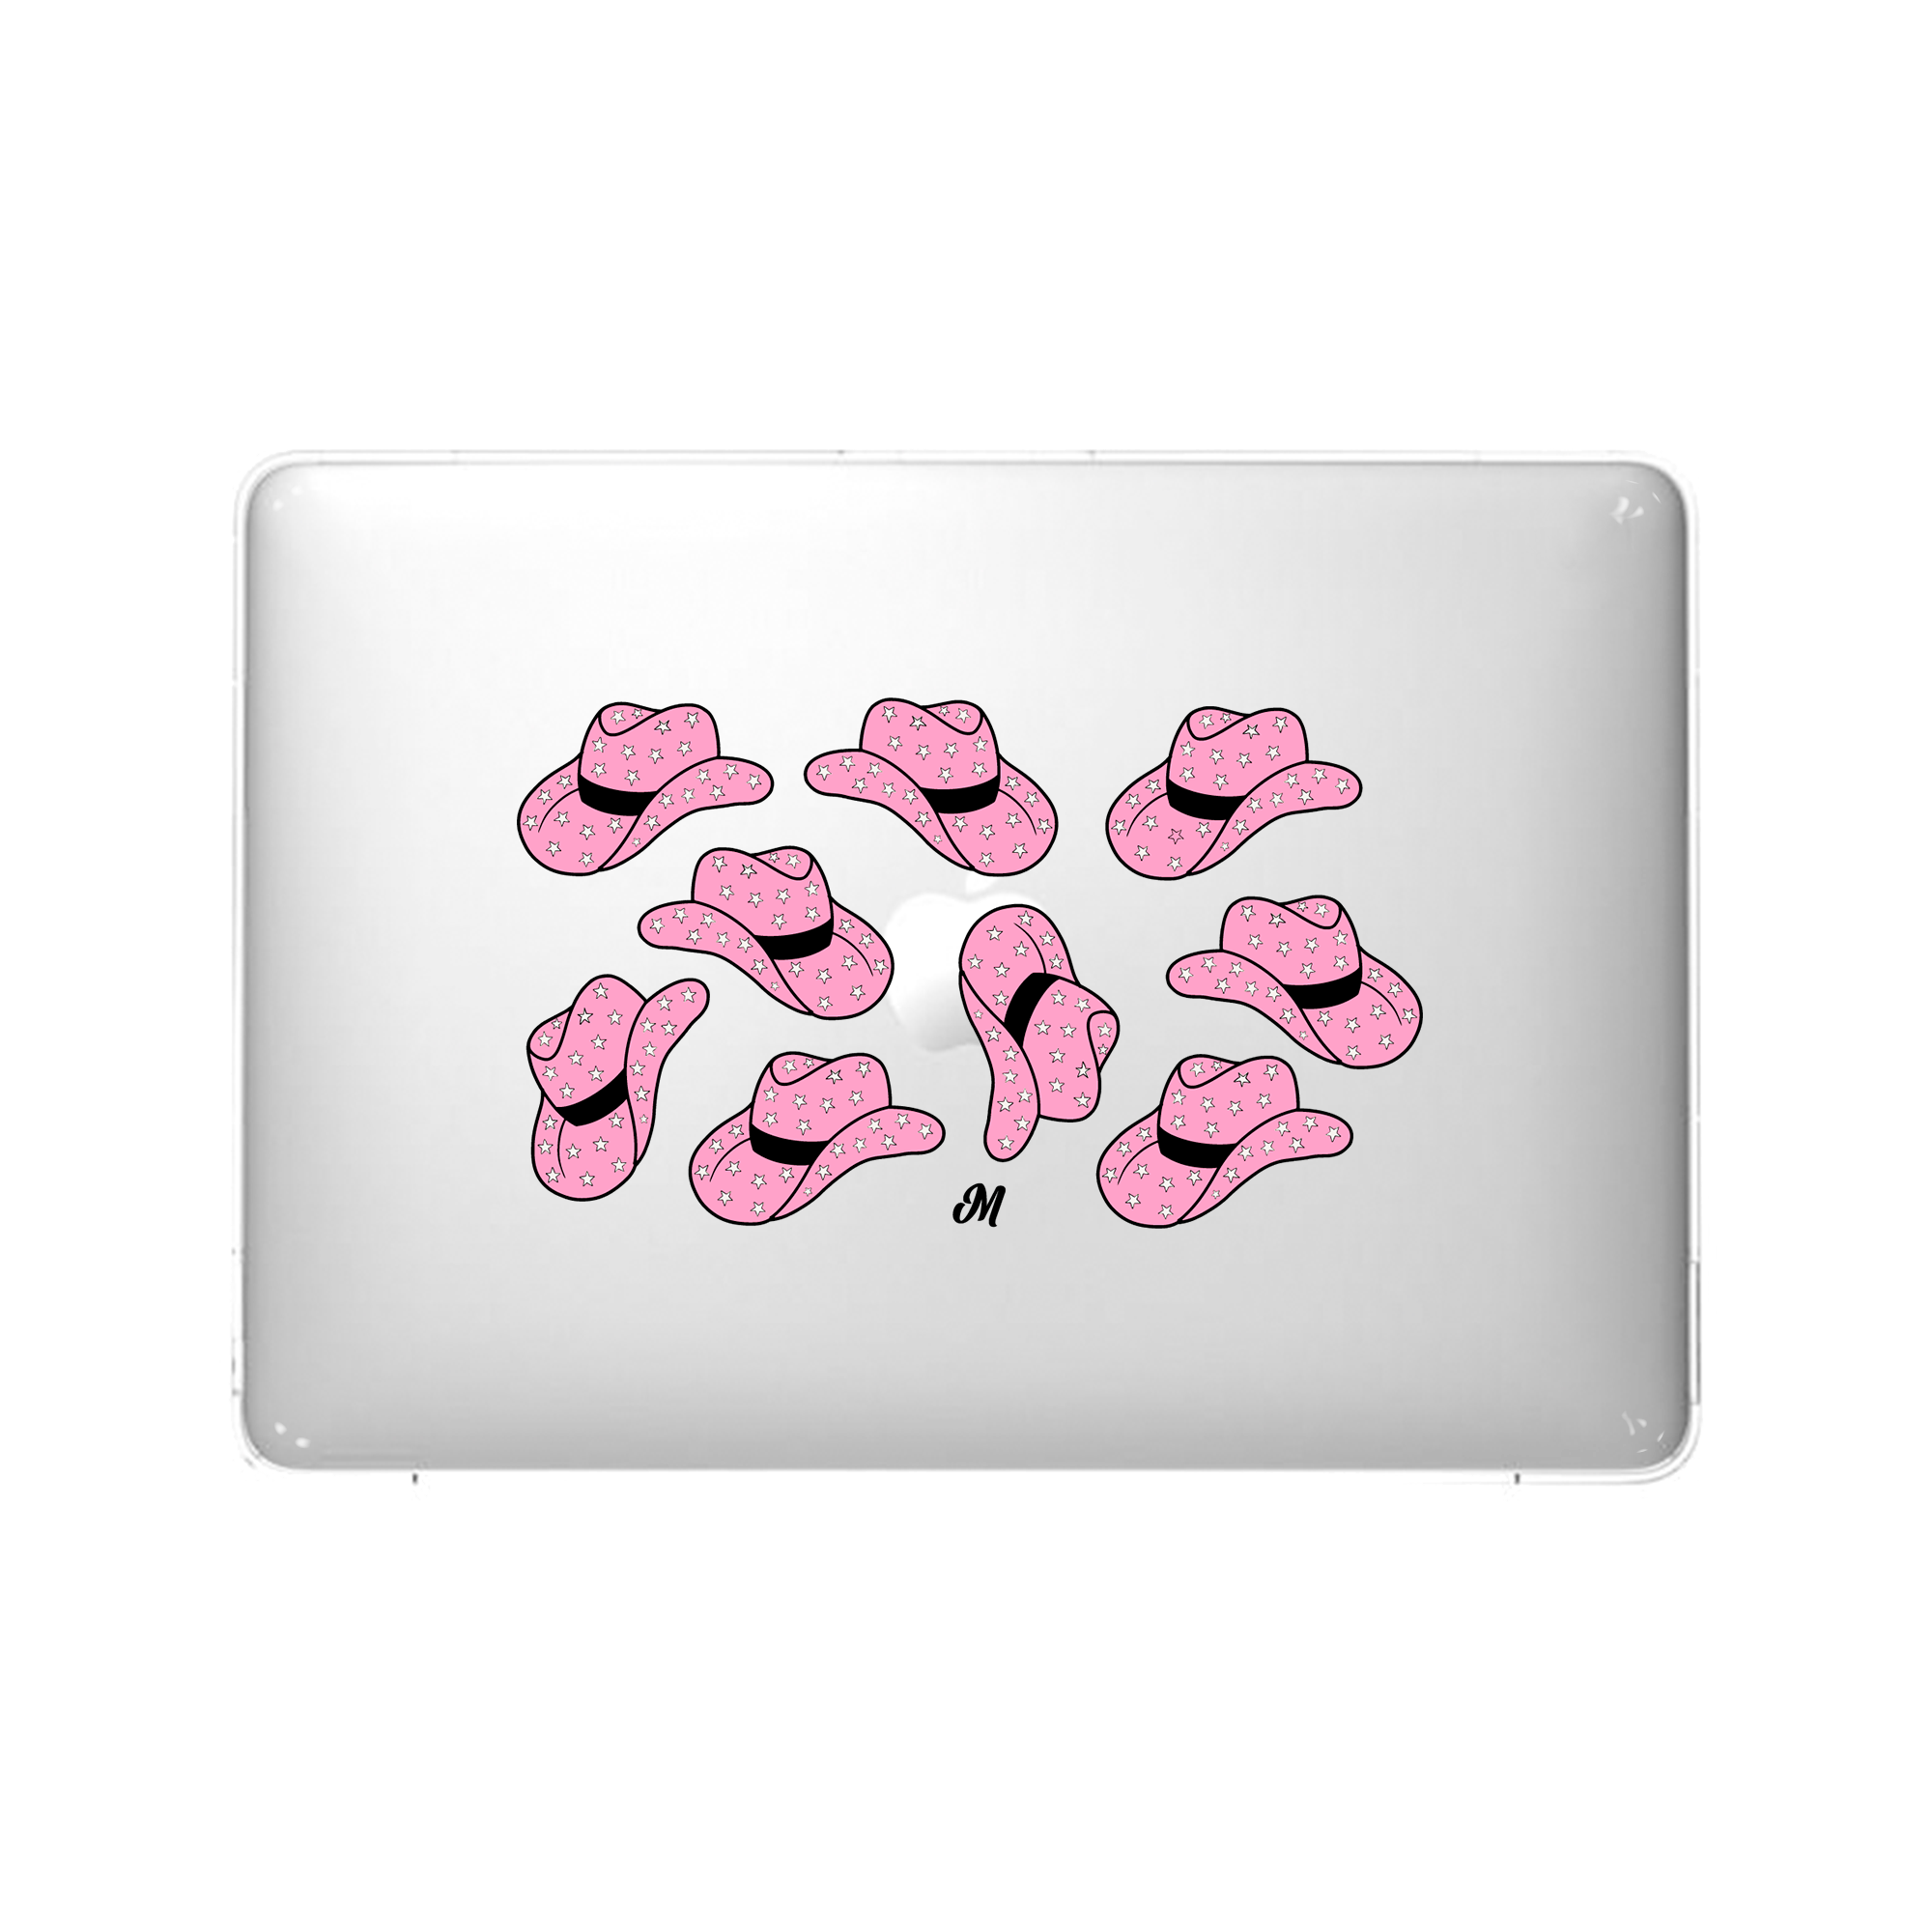 SombreroVaquera Rosado MacBook Case - Mandala Cases